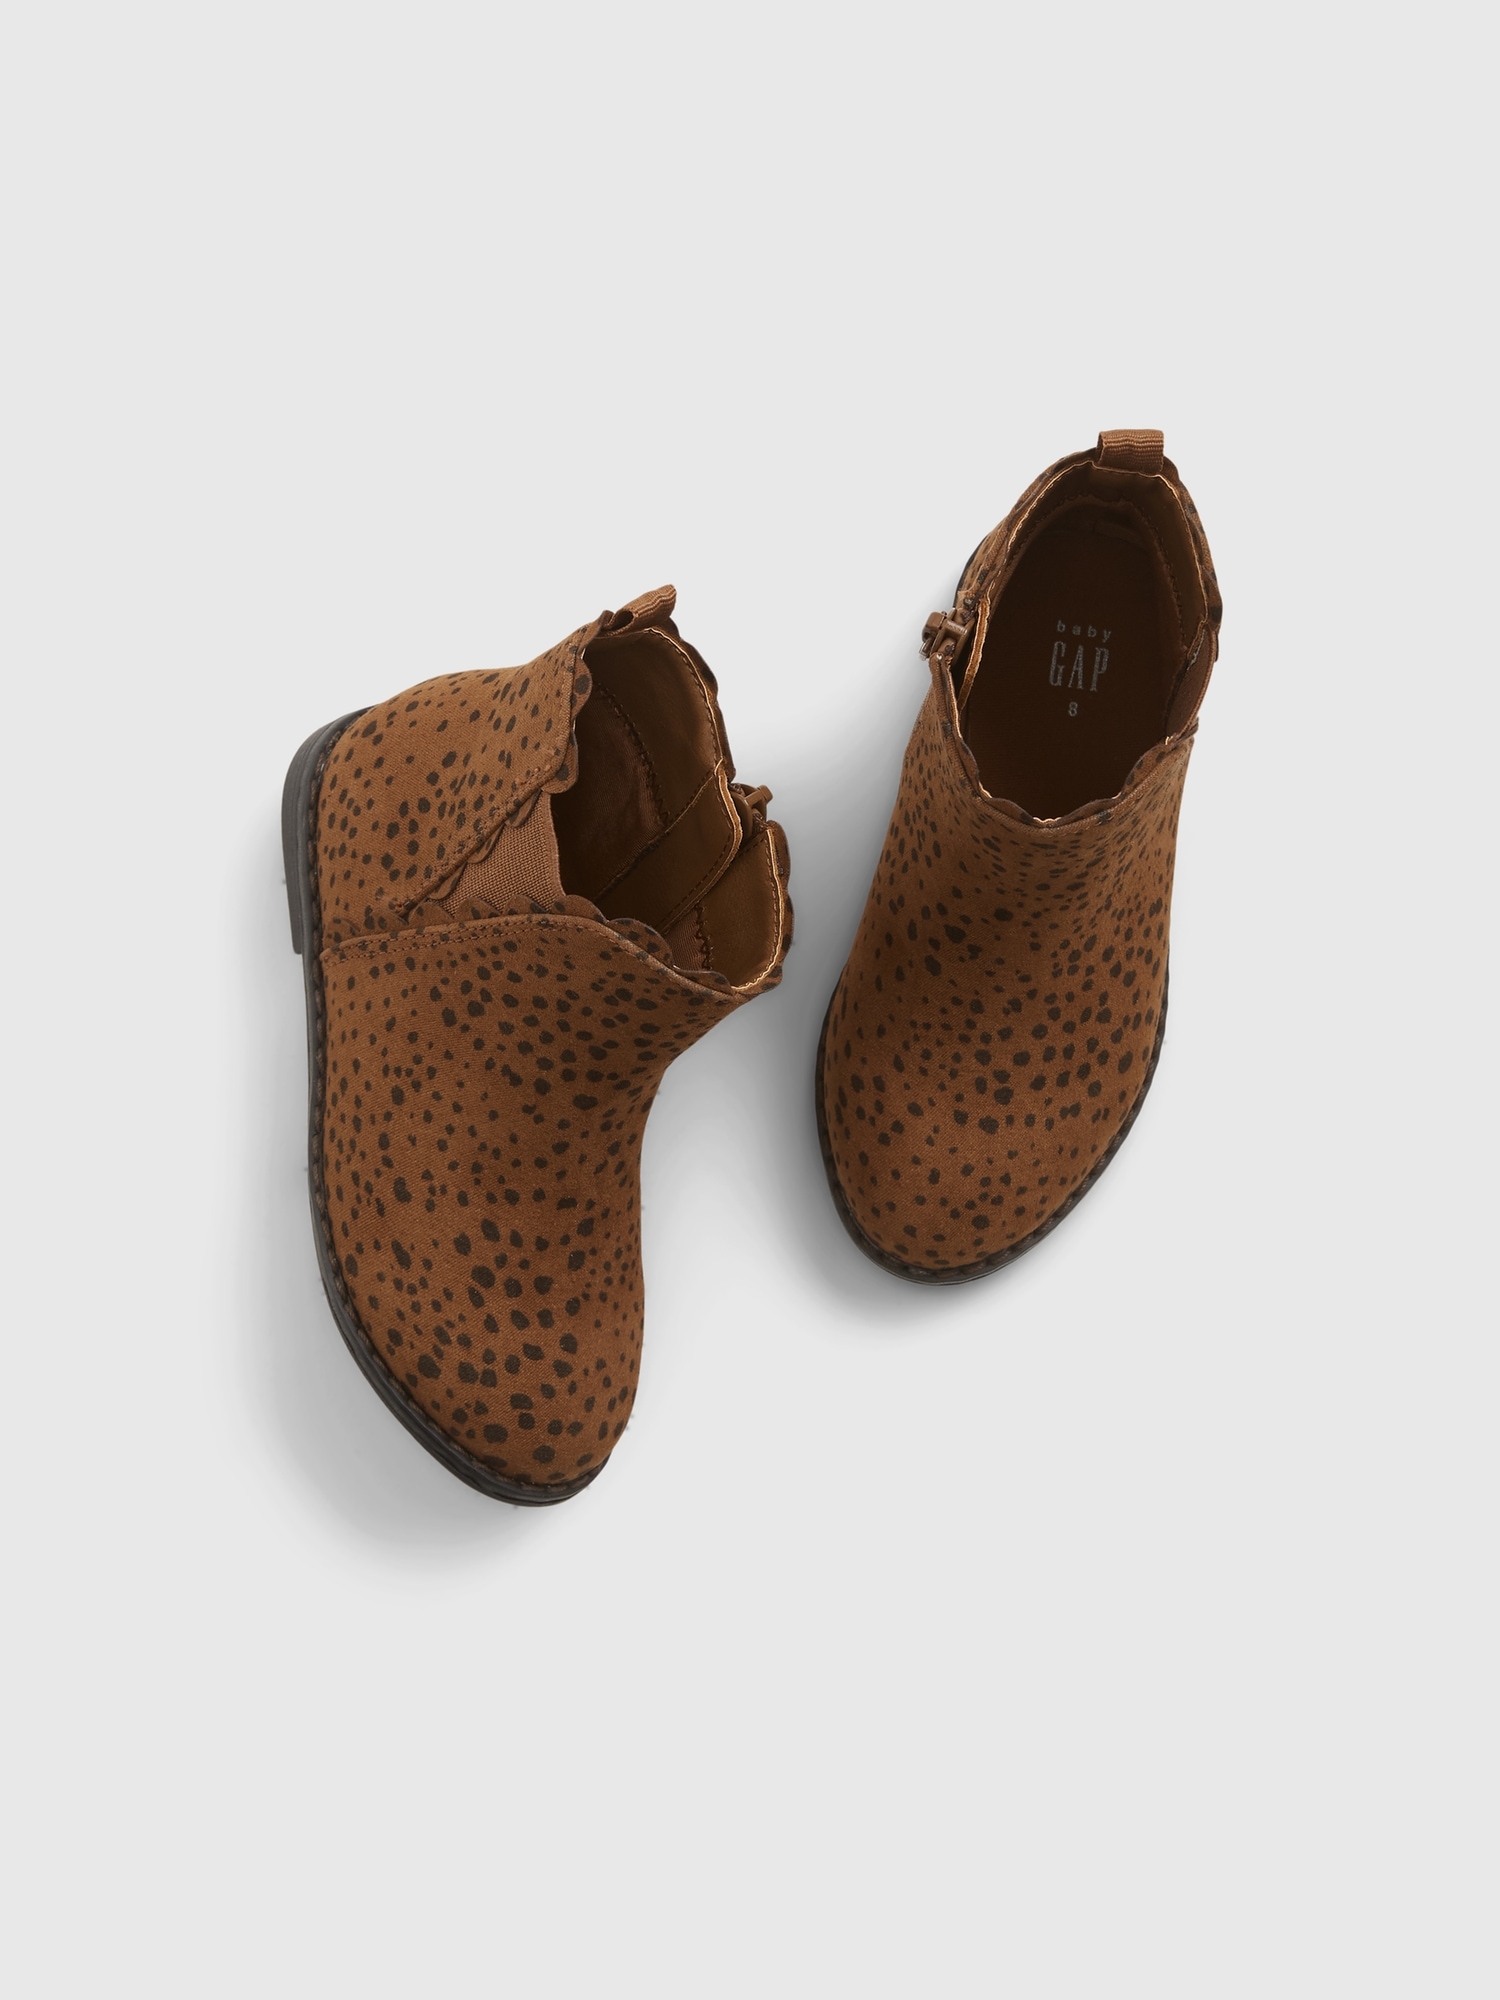 gap cheetah boots